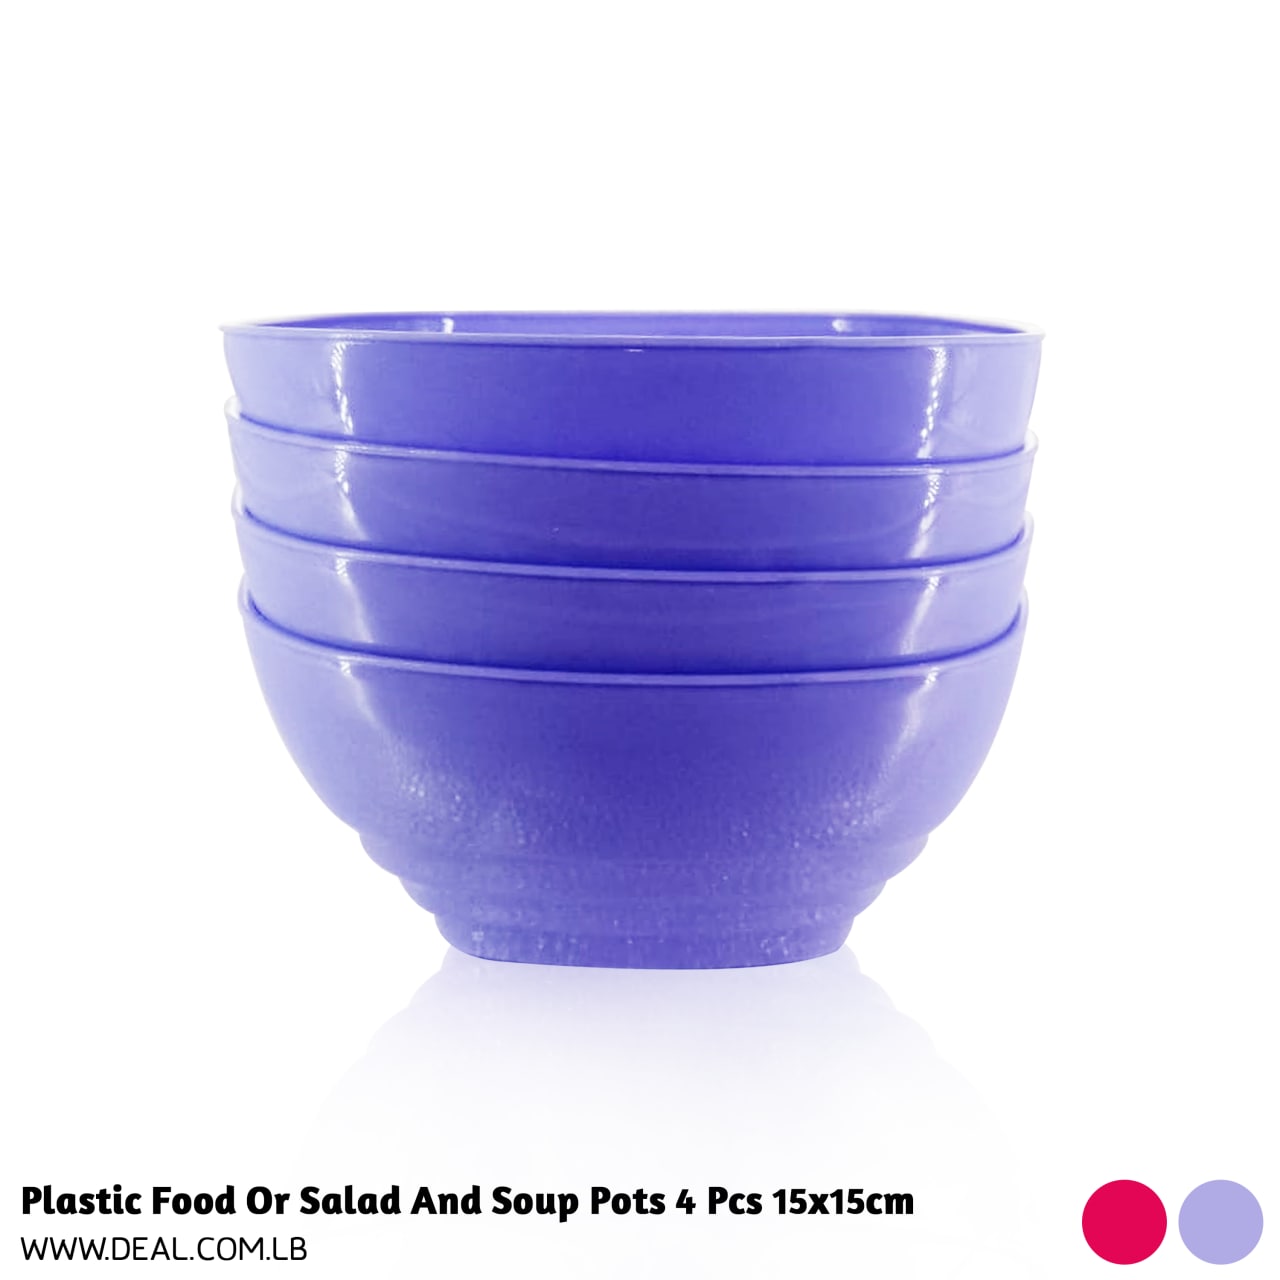 Plastic Food Or Salad And Soup Pots 4 Pcs 15x15cm